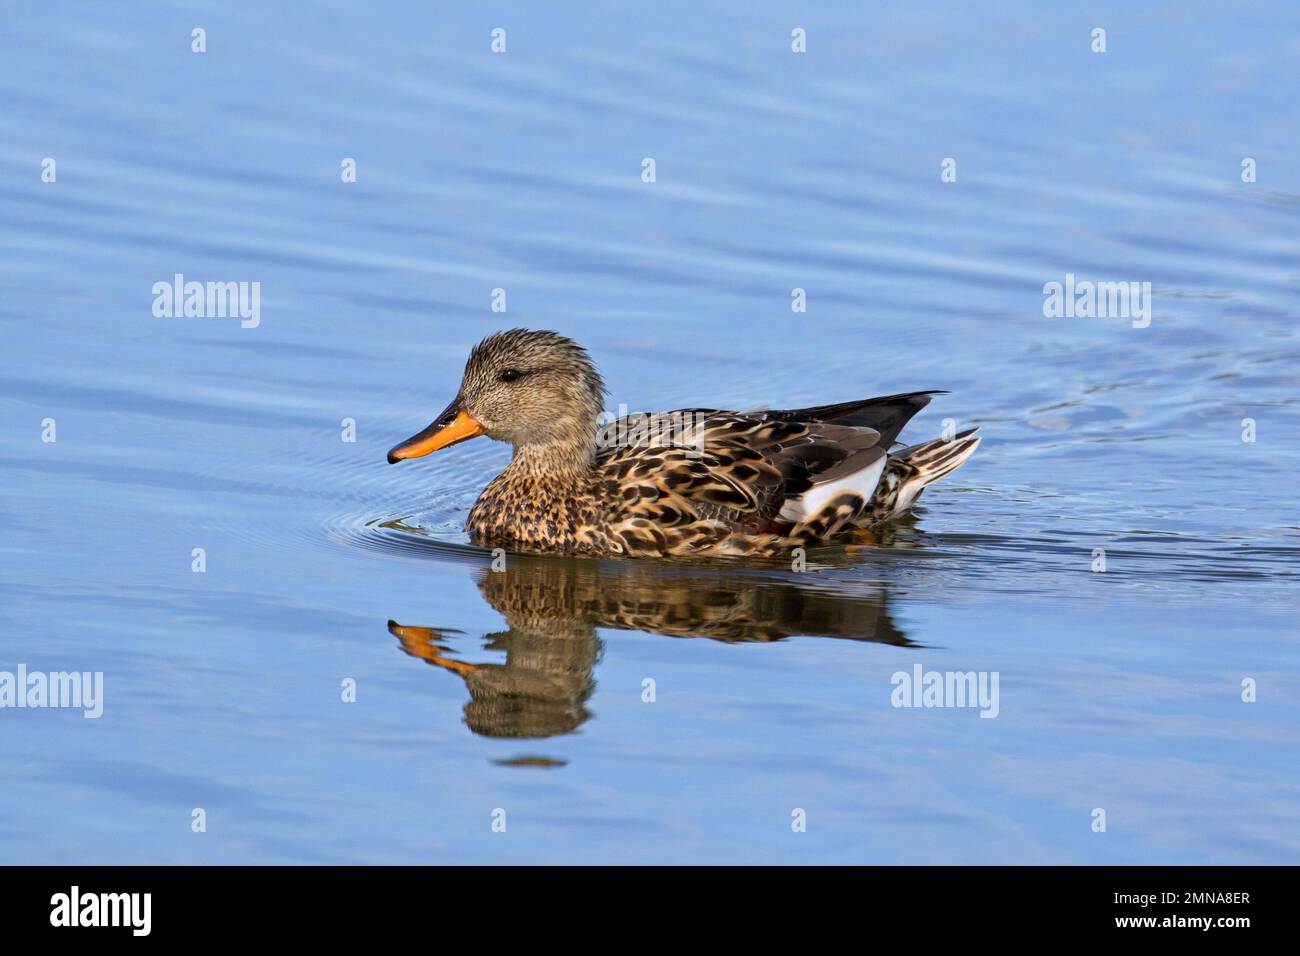 Gadwall (Mareca strepera / Anas strepera) female dabbling duck swimming in lake Stock Photo